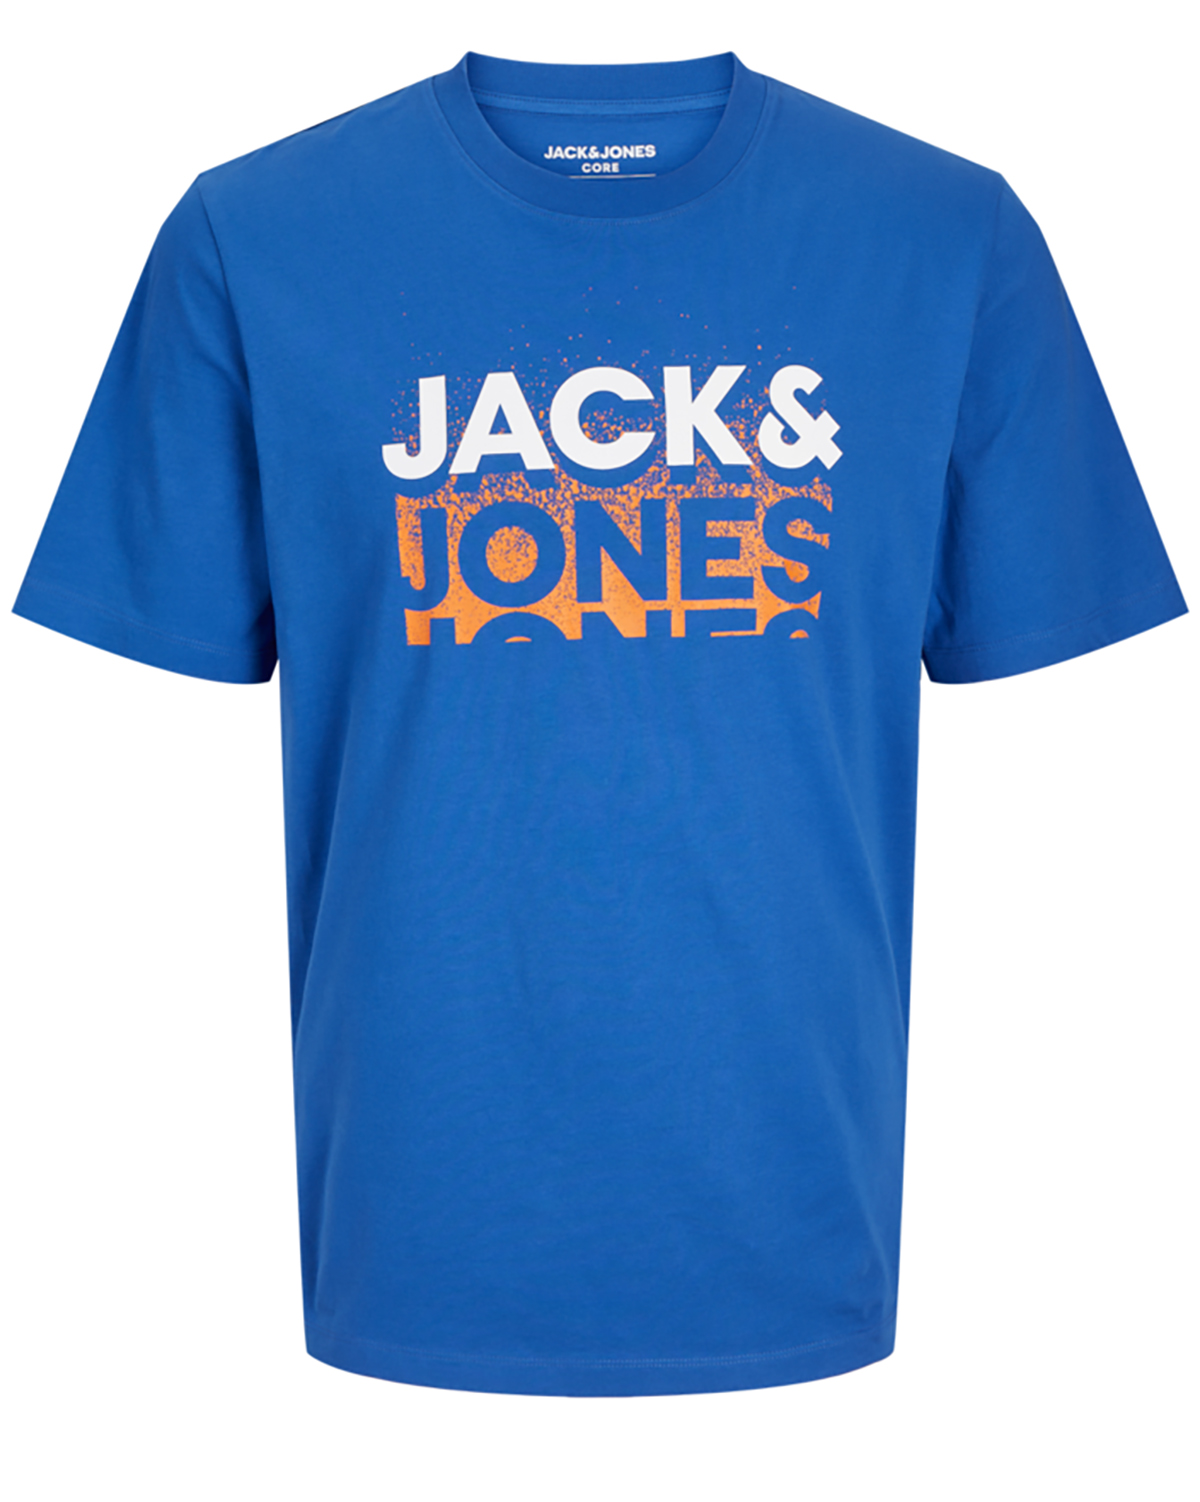 Jack & Jones t-shirt s/s, Gradient tee, blå - 188,L+,L